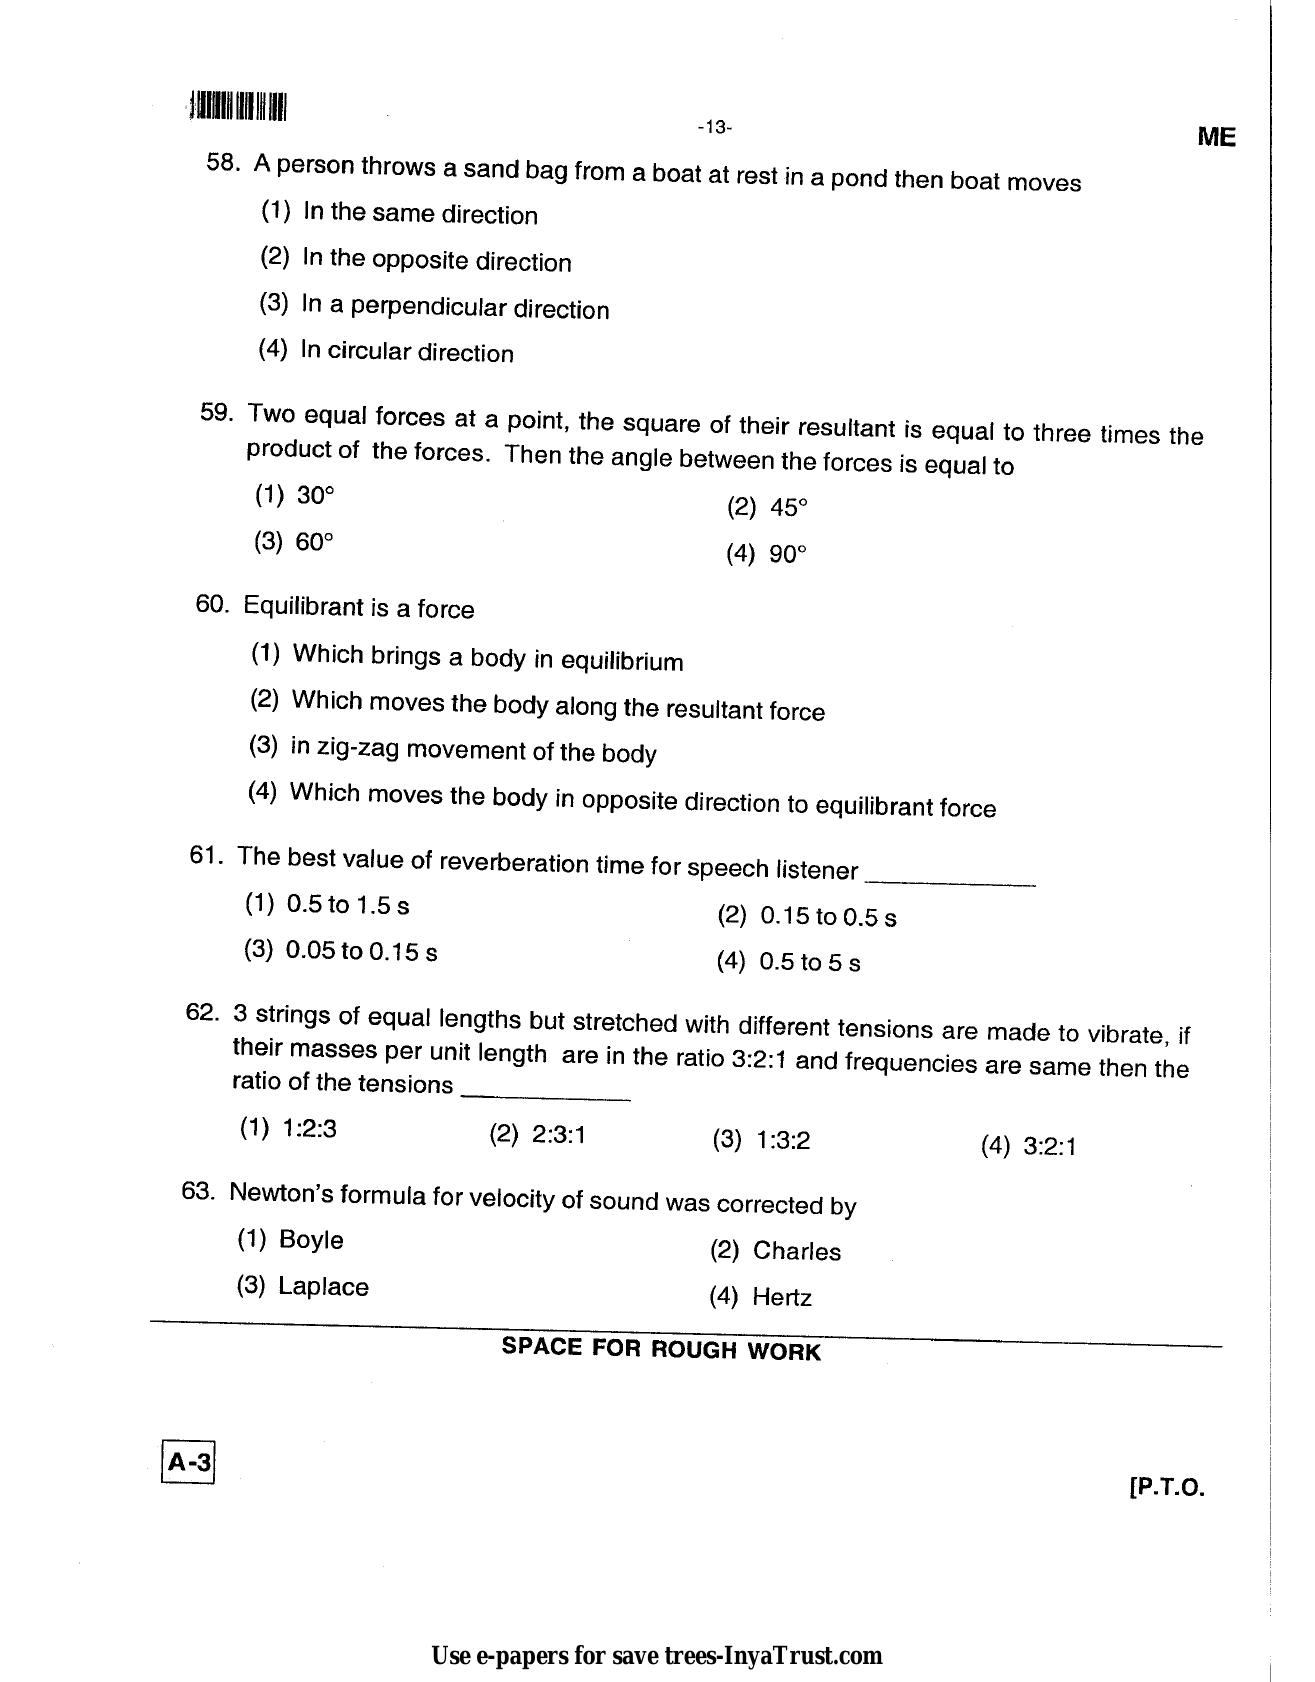 Karnataka Diploma CET- 2013 Mechanical Engineering Question Paper - Page 11